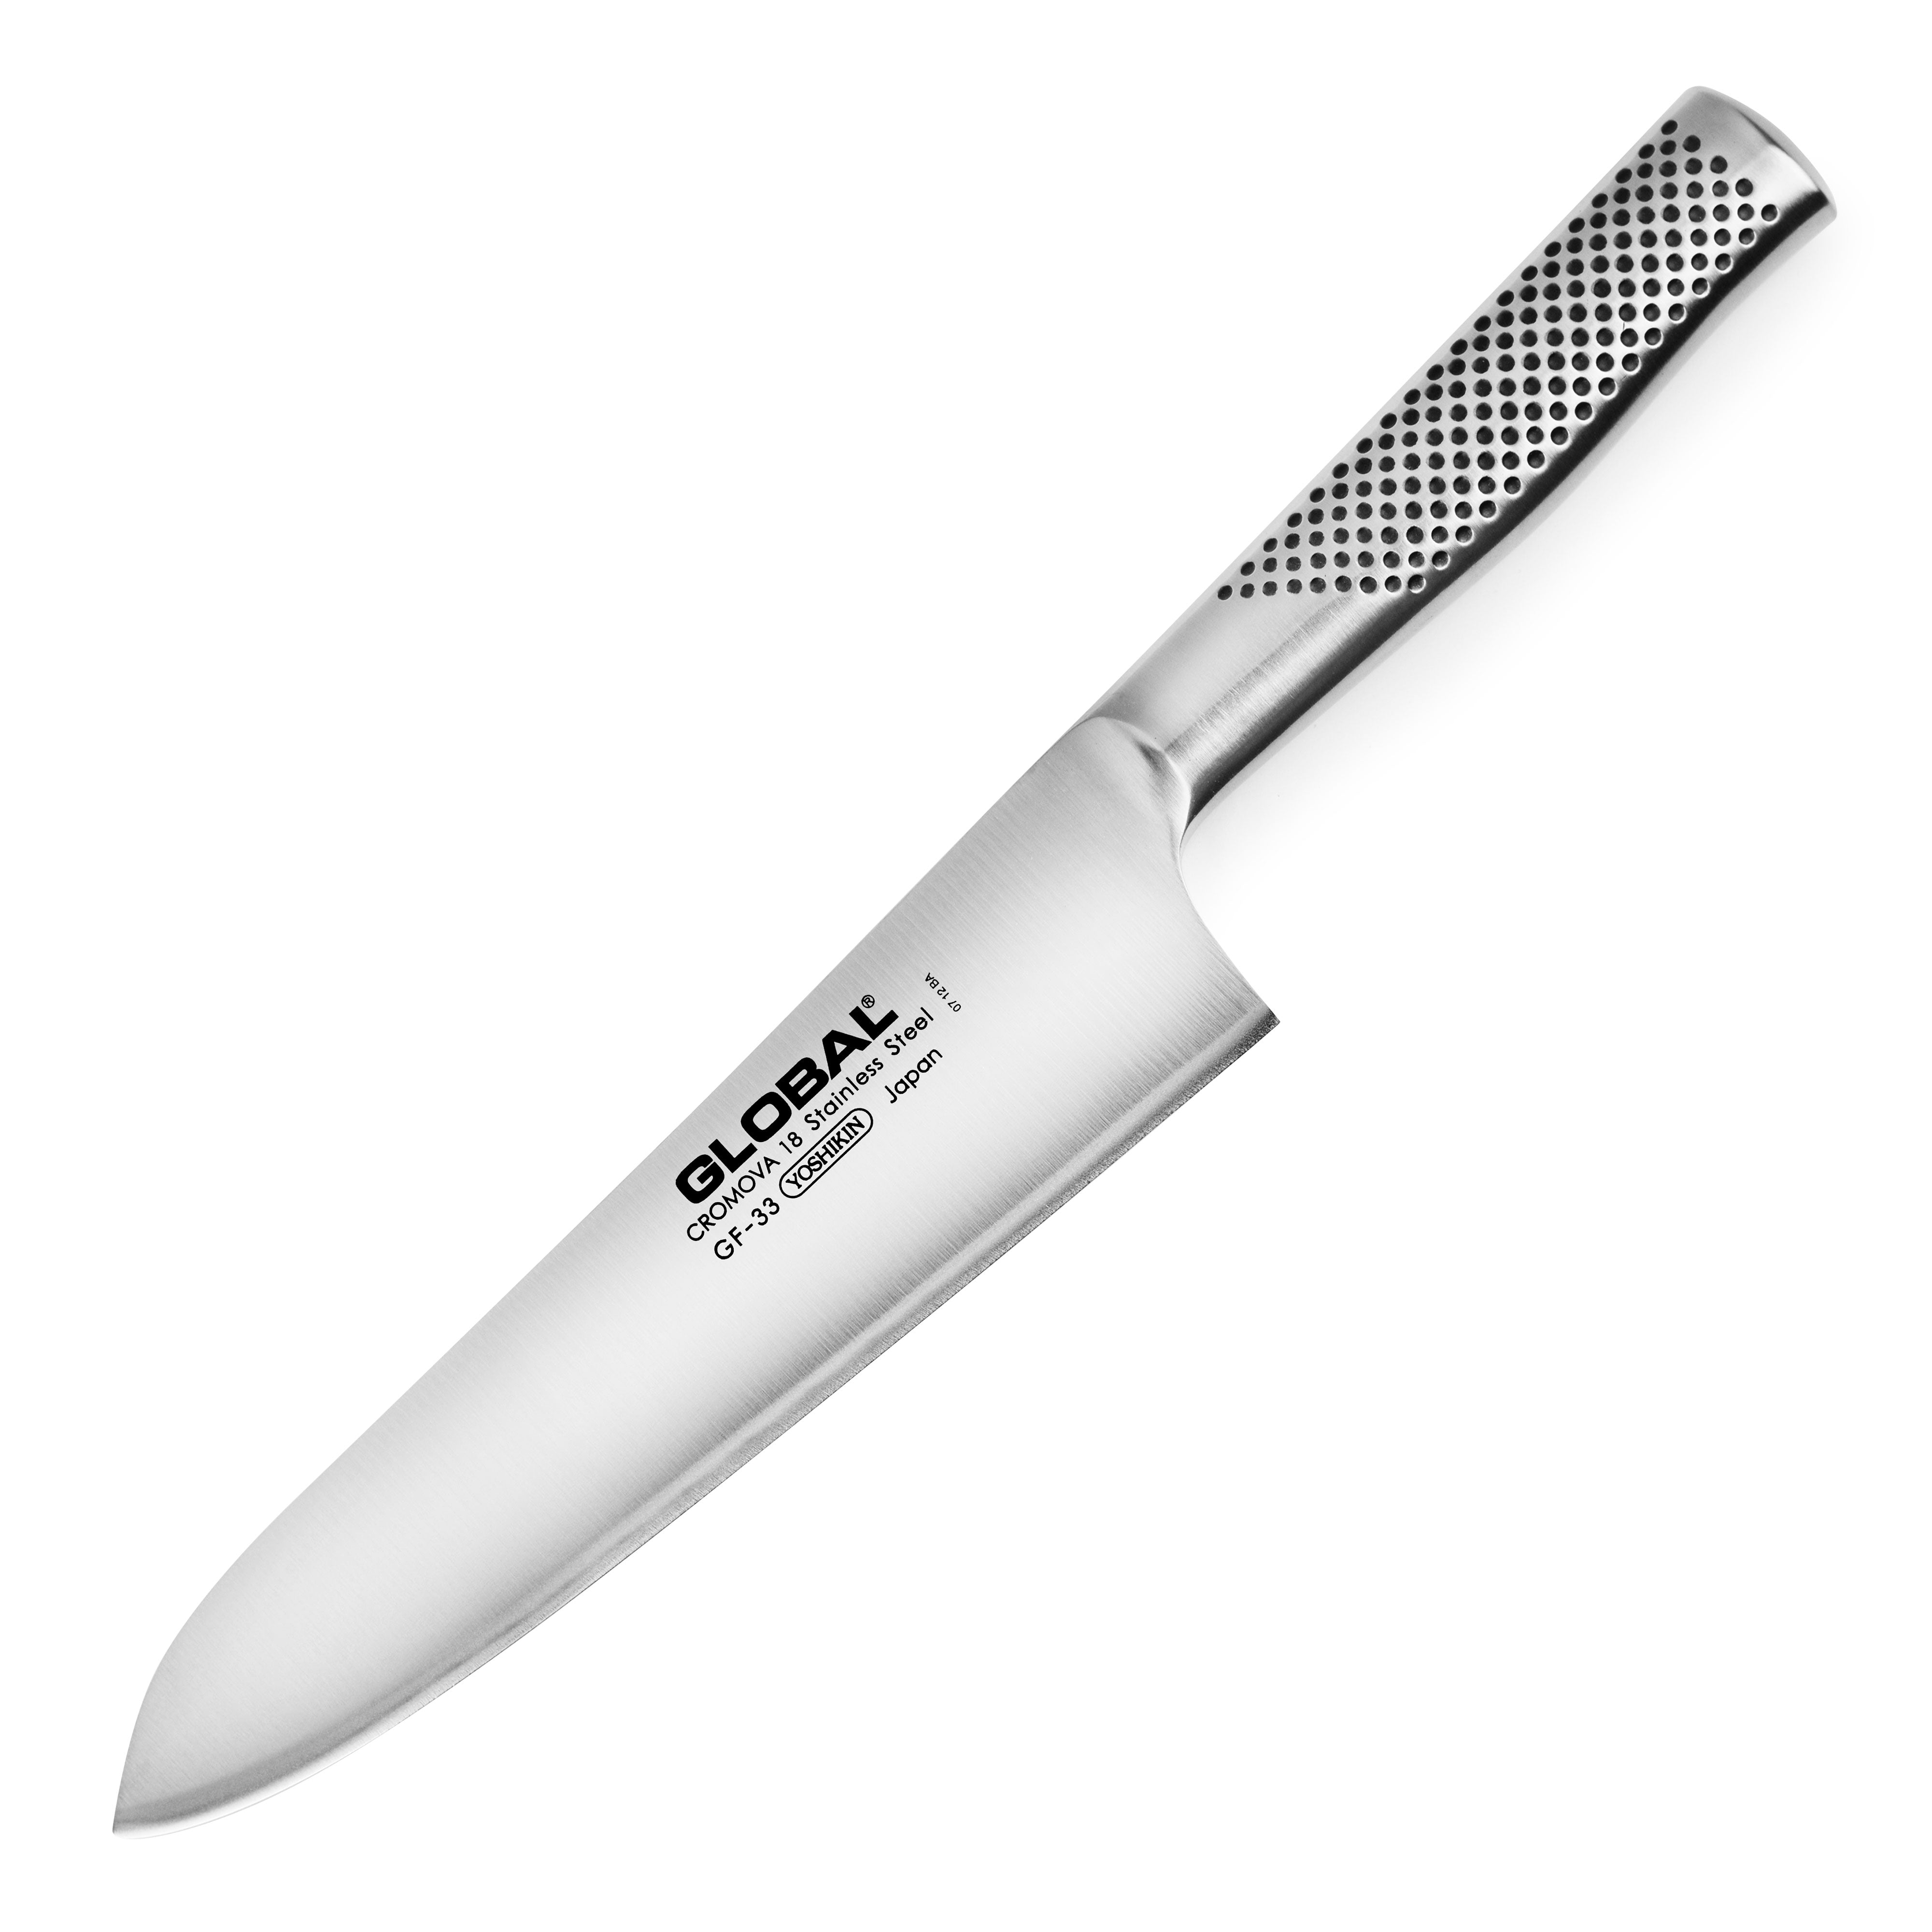 Global GF-33 Chef Knife, 21 cms - 8 Inch